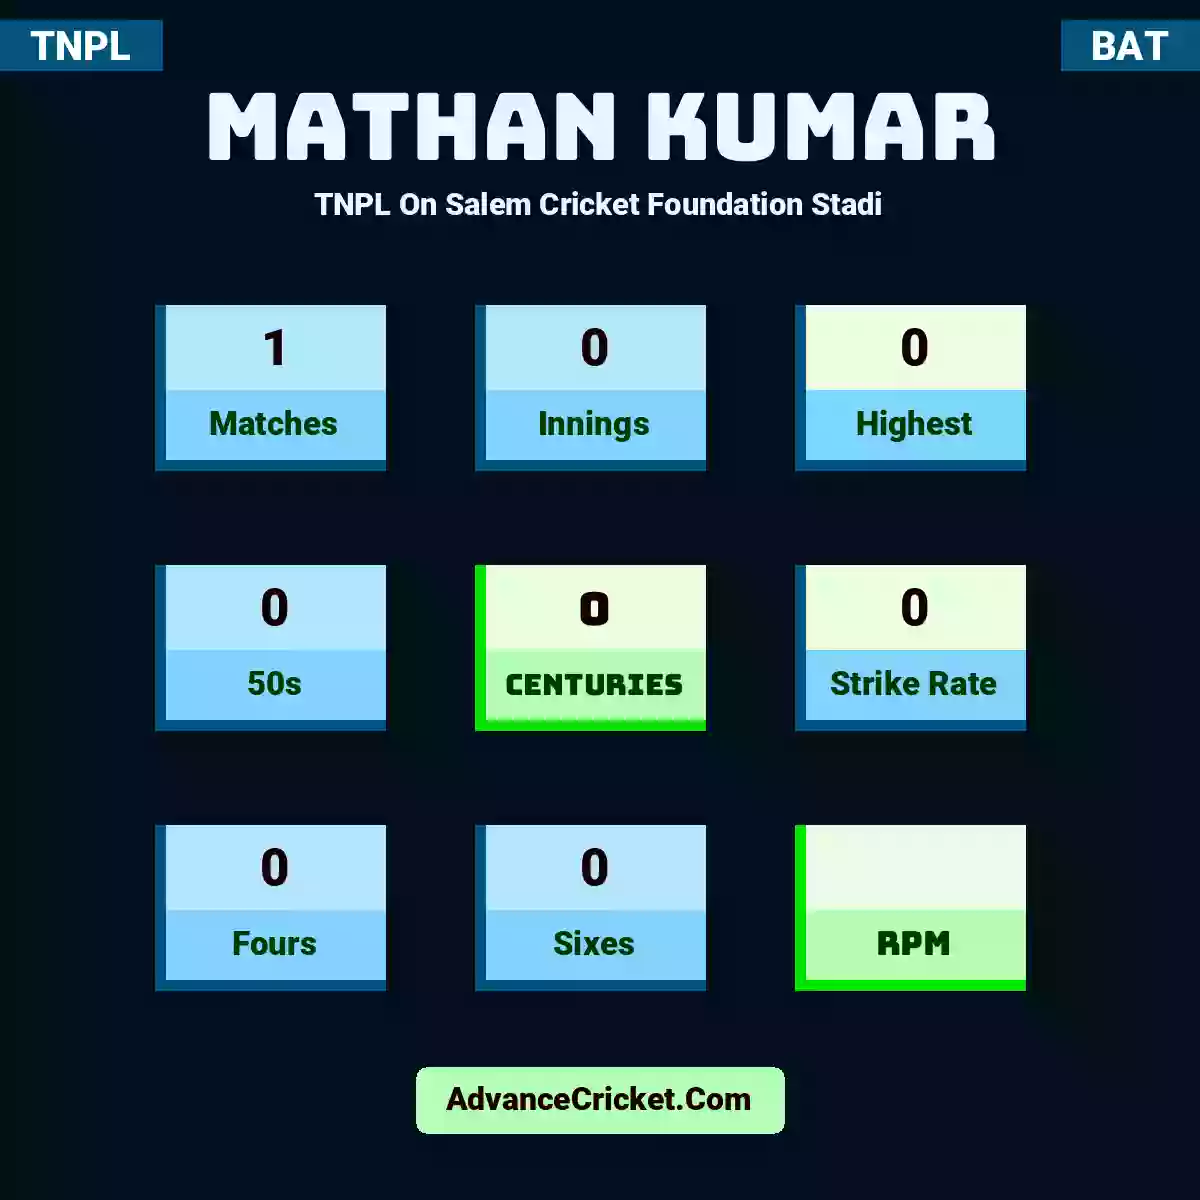 Mathan Kumar TNPL  On Salem Cricket Foundation Stadi, Mathan Kumar played 1 matches, scored 0 runs as highest, 0 half-centuries, and 0 centuries, with a strike rate of 0. M.Kumar hit 0 fours and 0 sixes.